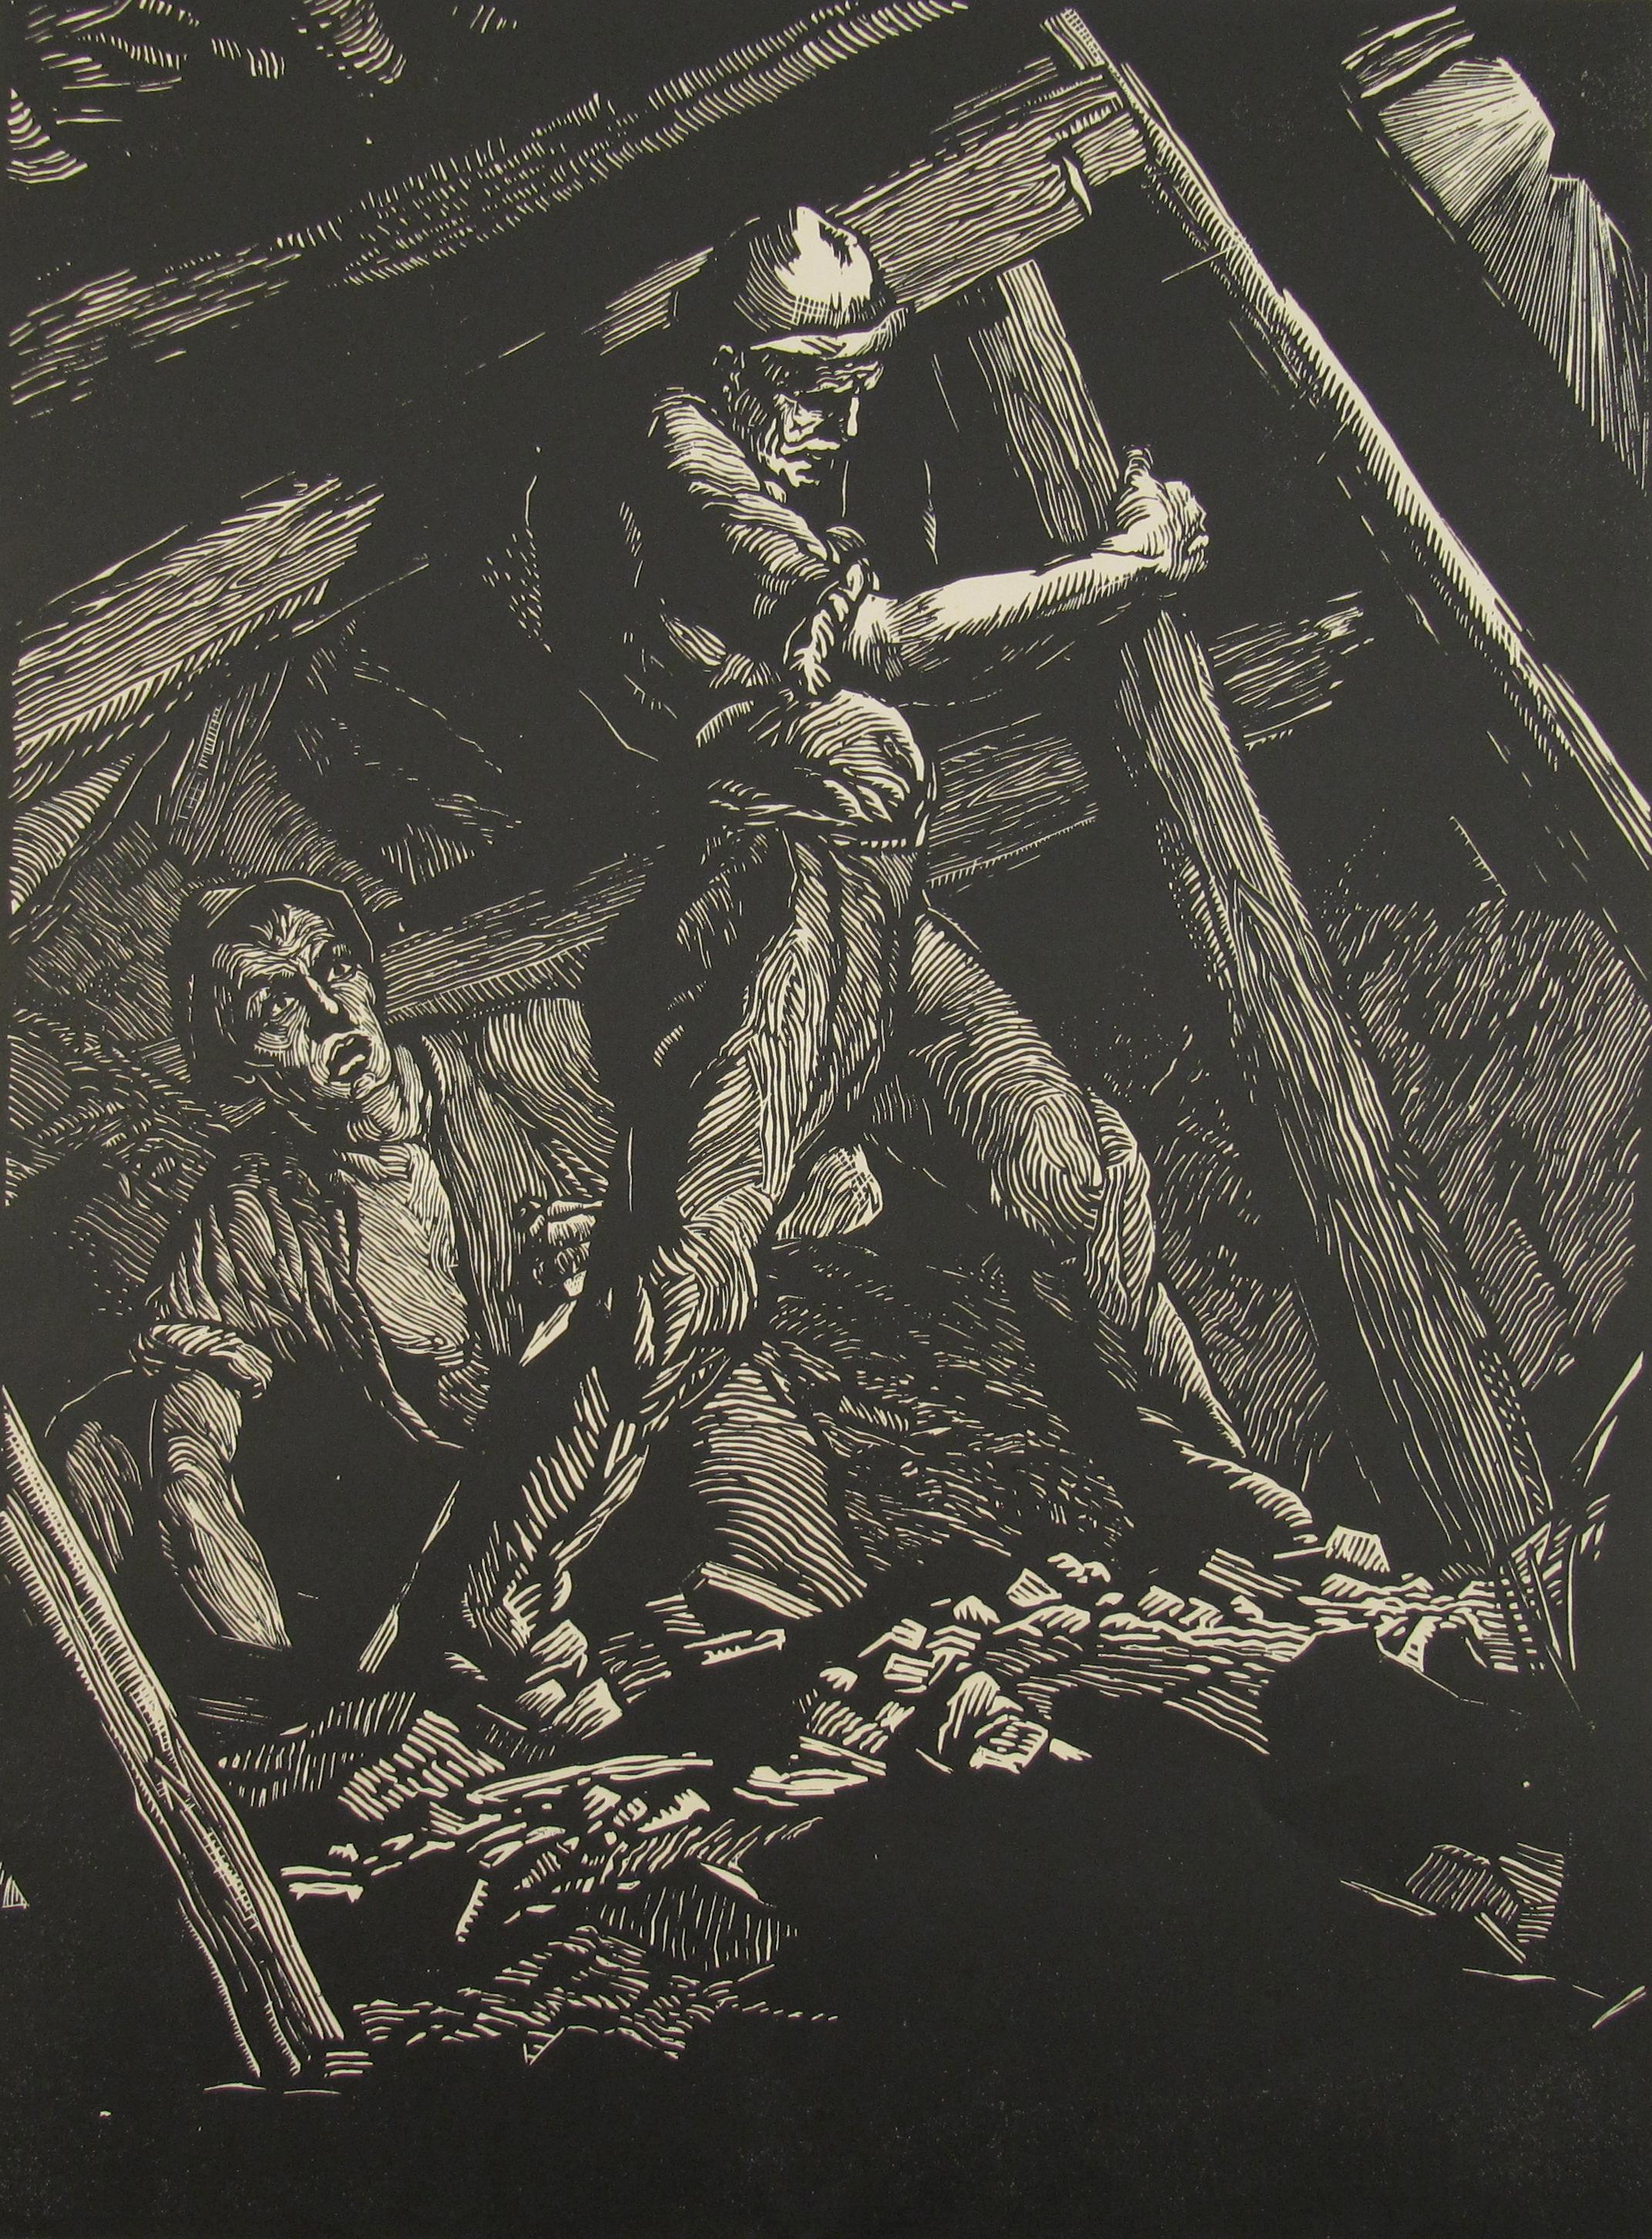 Coal Miners - INDUSTRIAL ART - Pre War German School - Large signed Woodcut